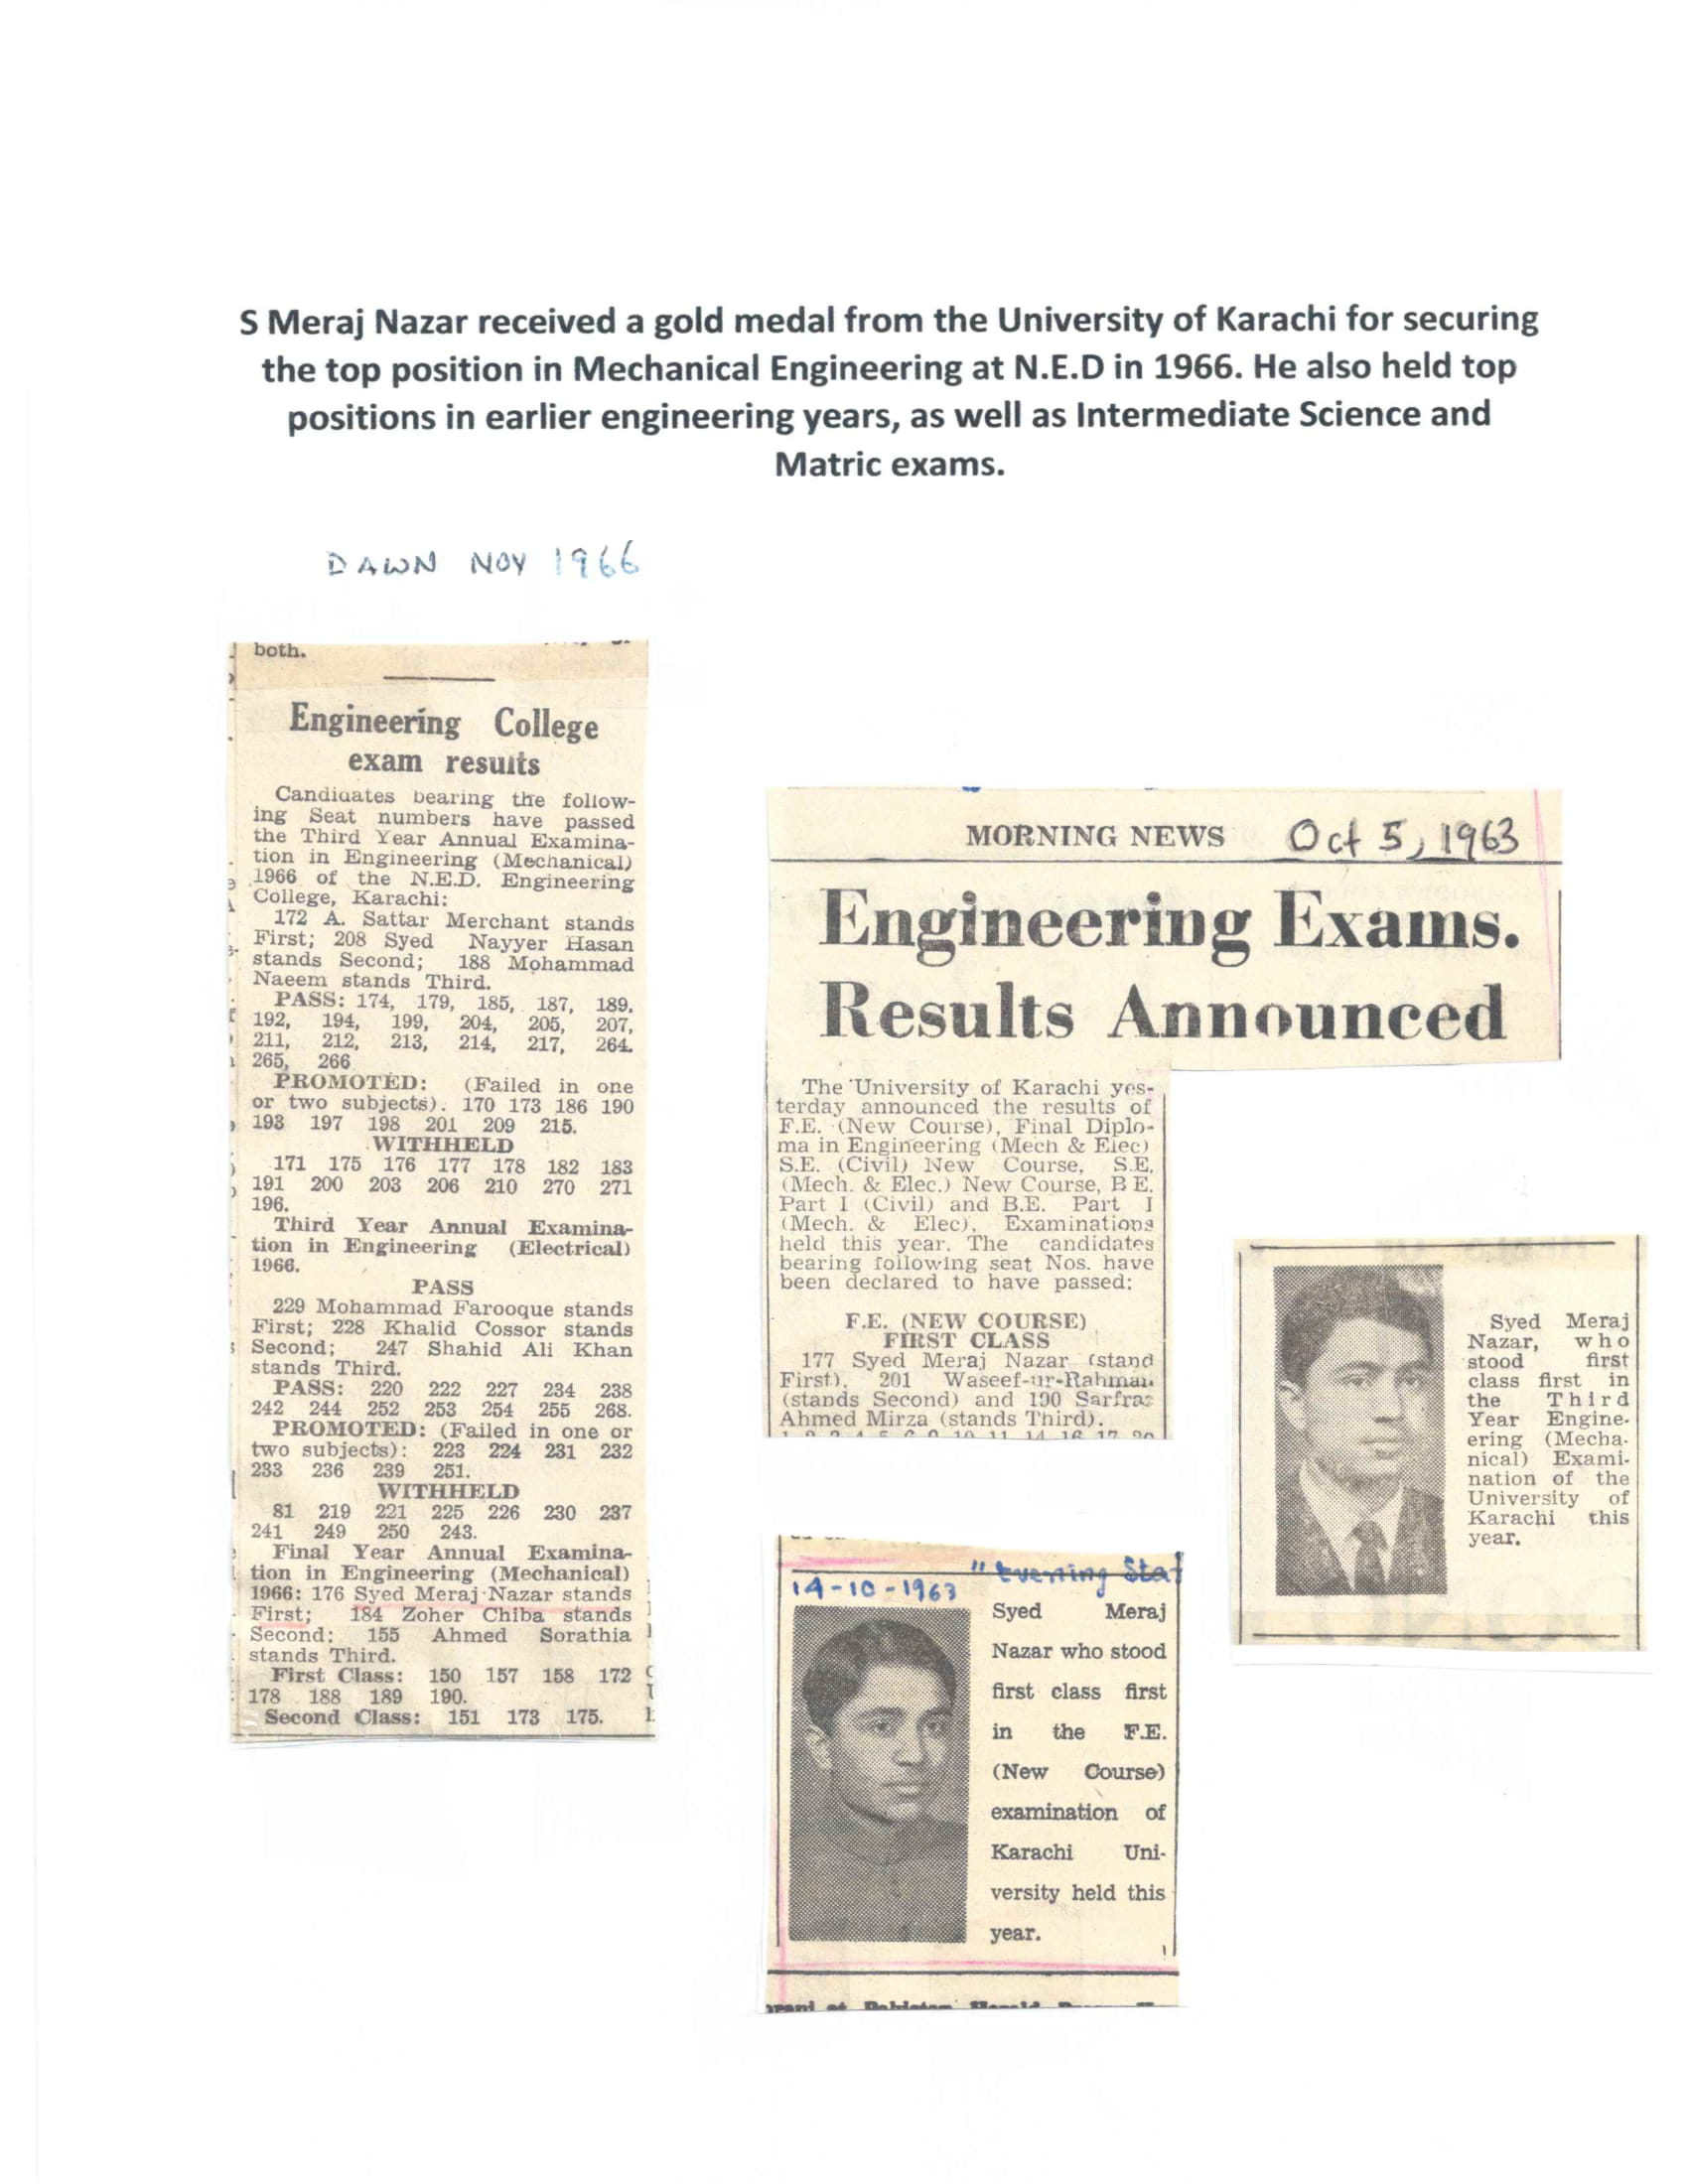 S Meraj Nazar Engineering Results